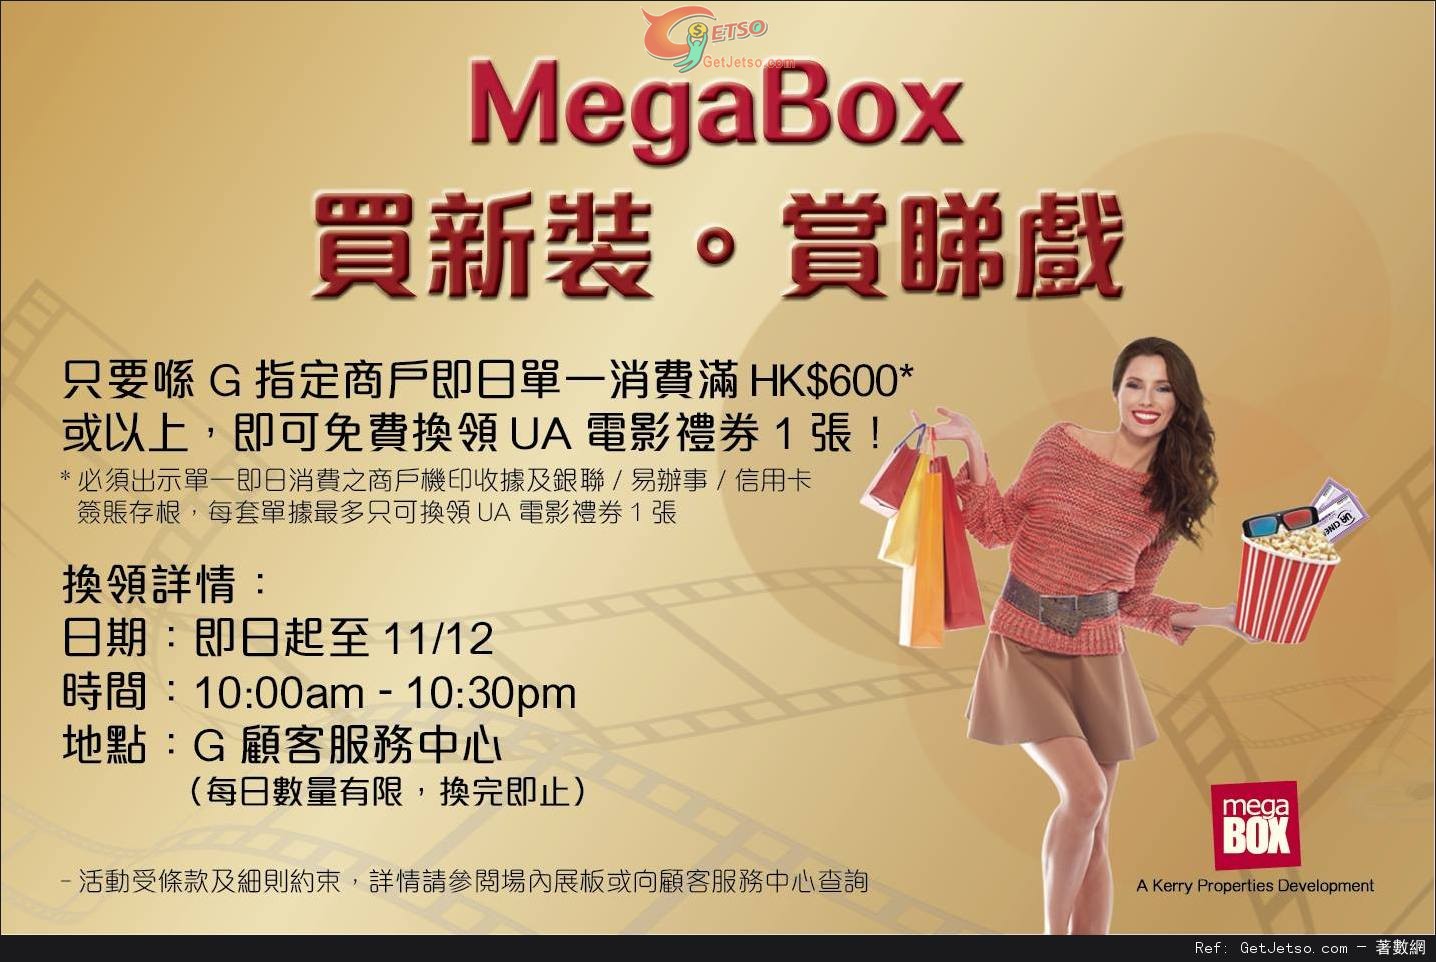 MegaBox 於指定商戶消費滿0送UA電影禮券優惠(至15年12月11日)圖片1